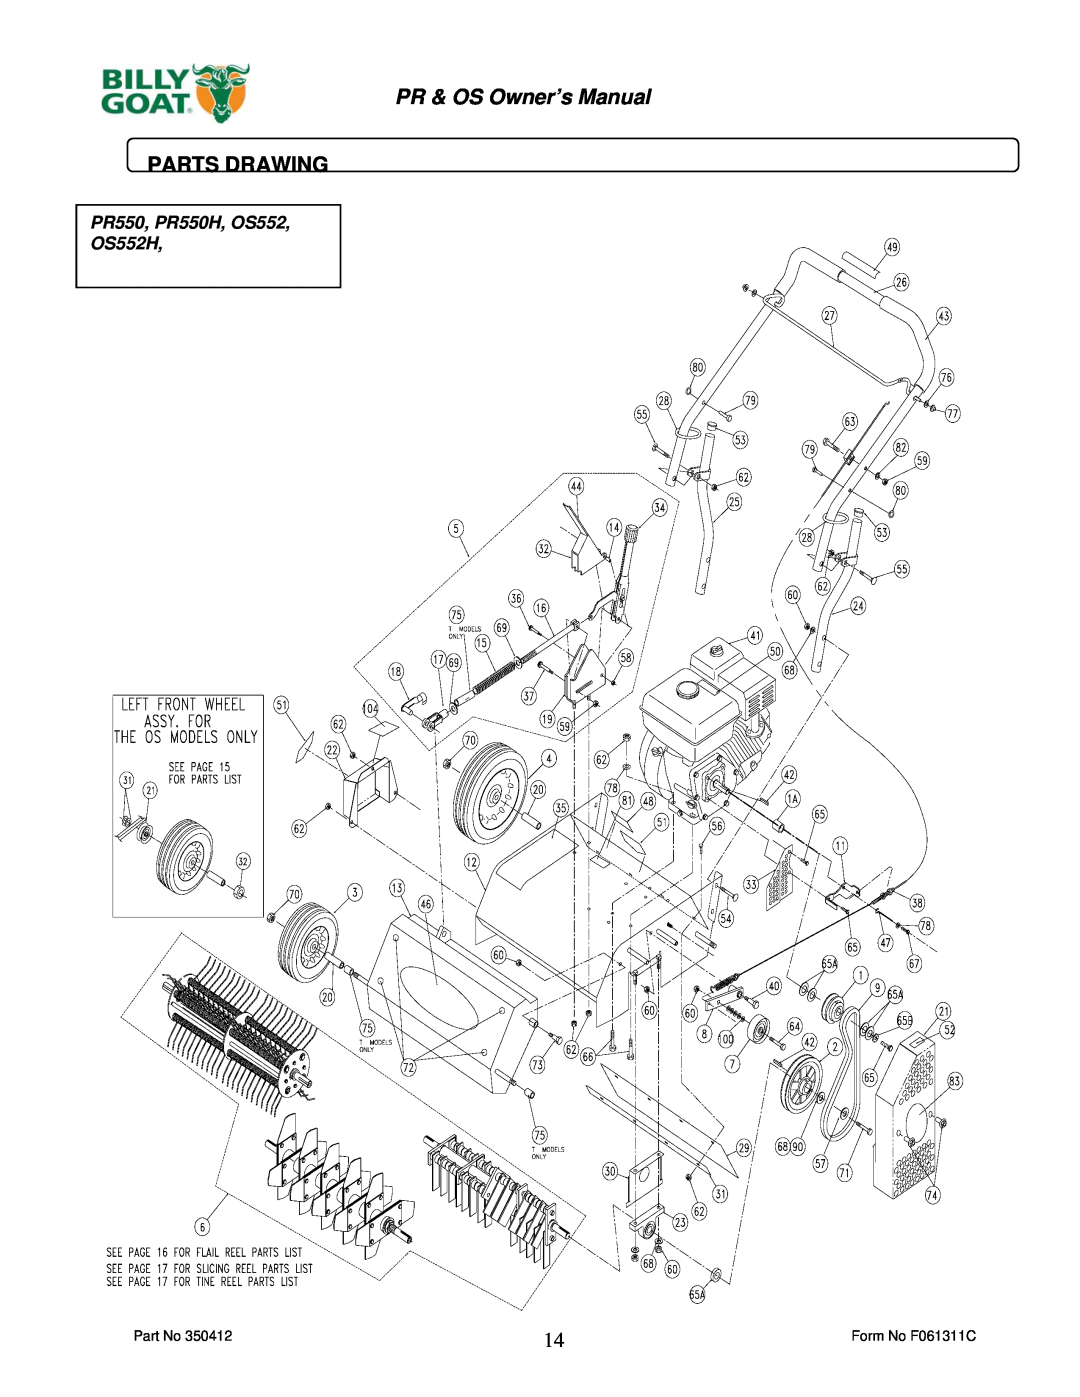 Billy Goat owner manual Parts Drawing, PR550, PR550H, OS552 OS552H 